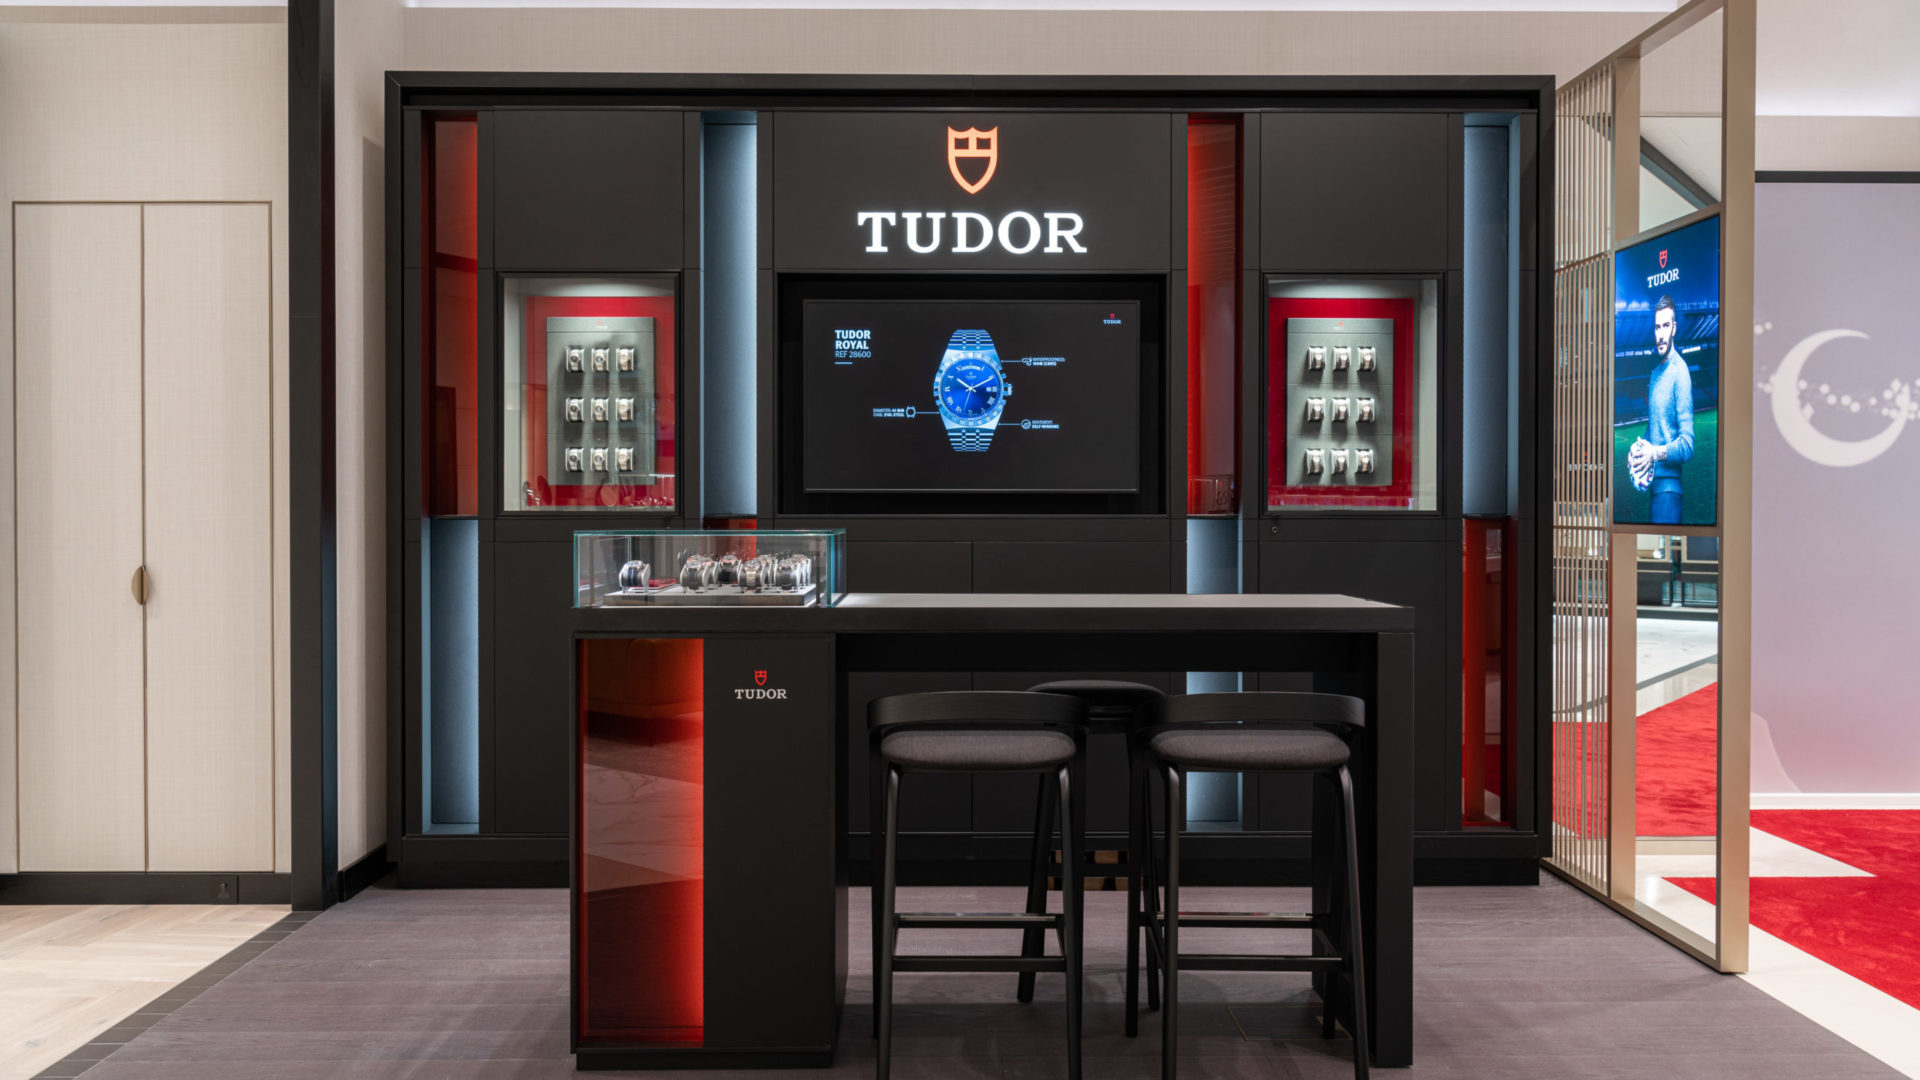 Tudor boutique